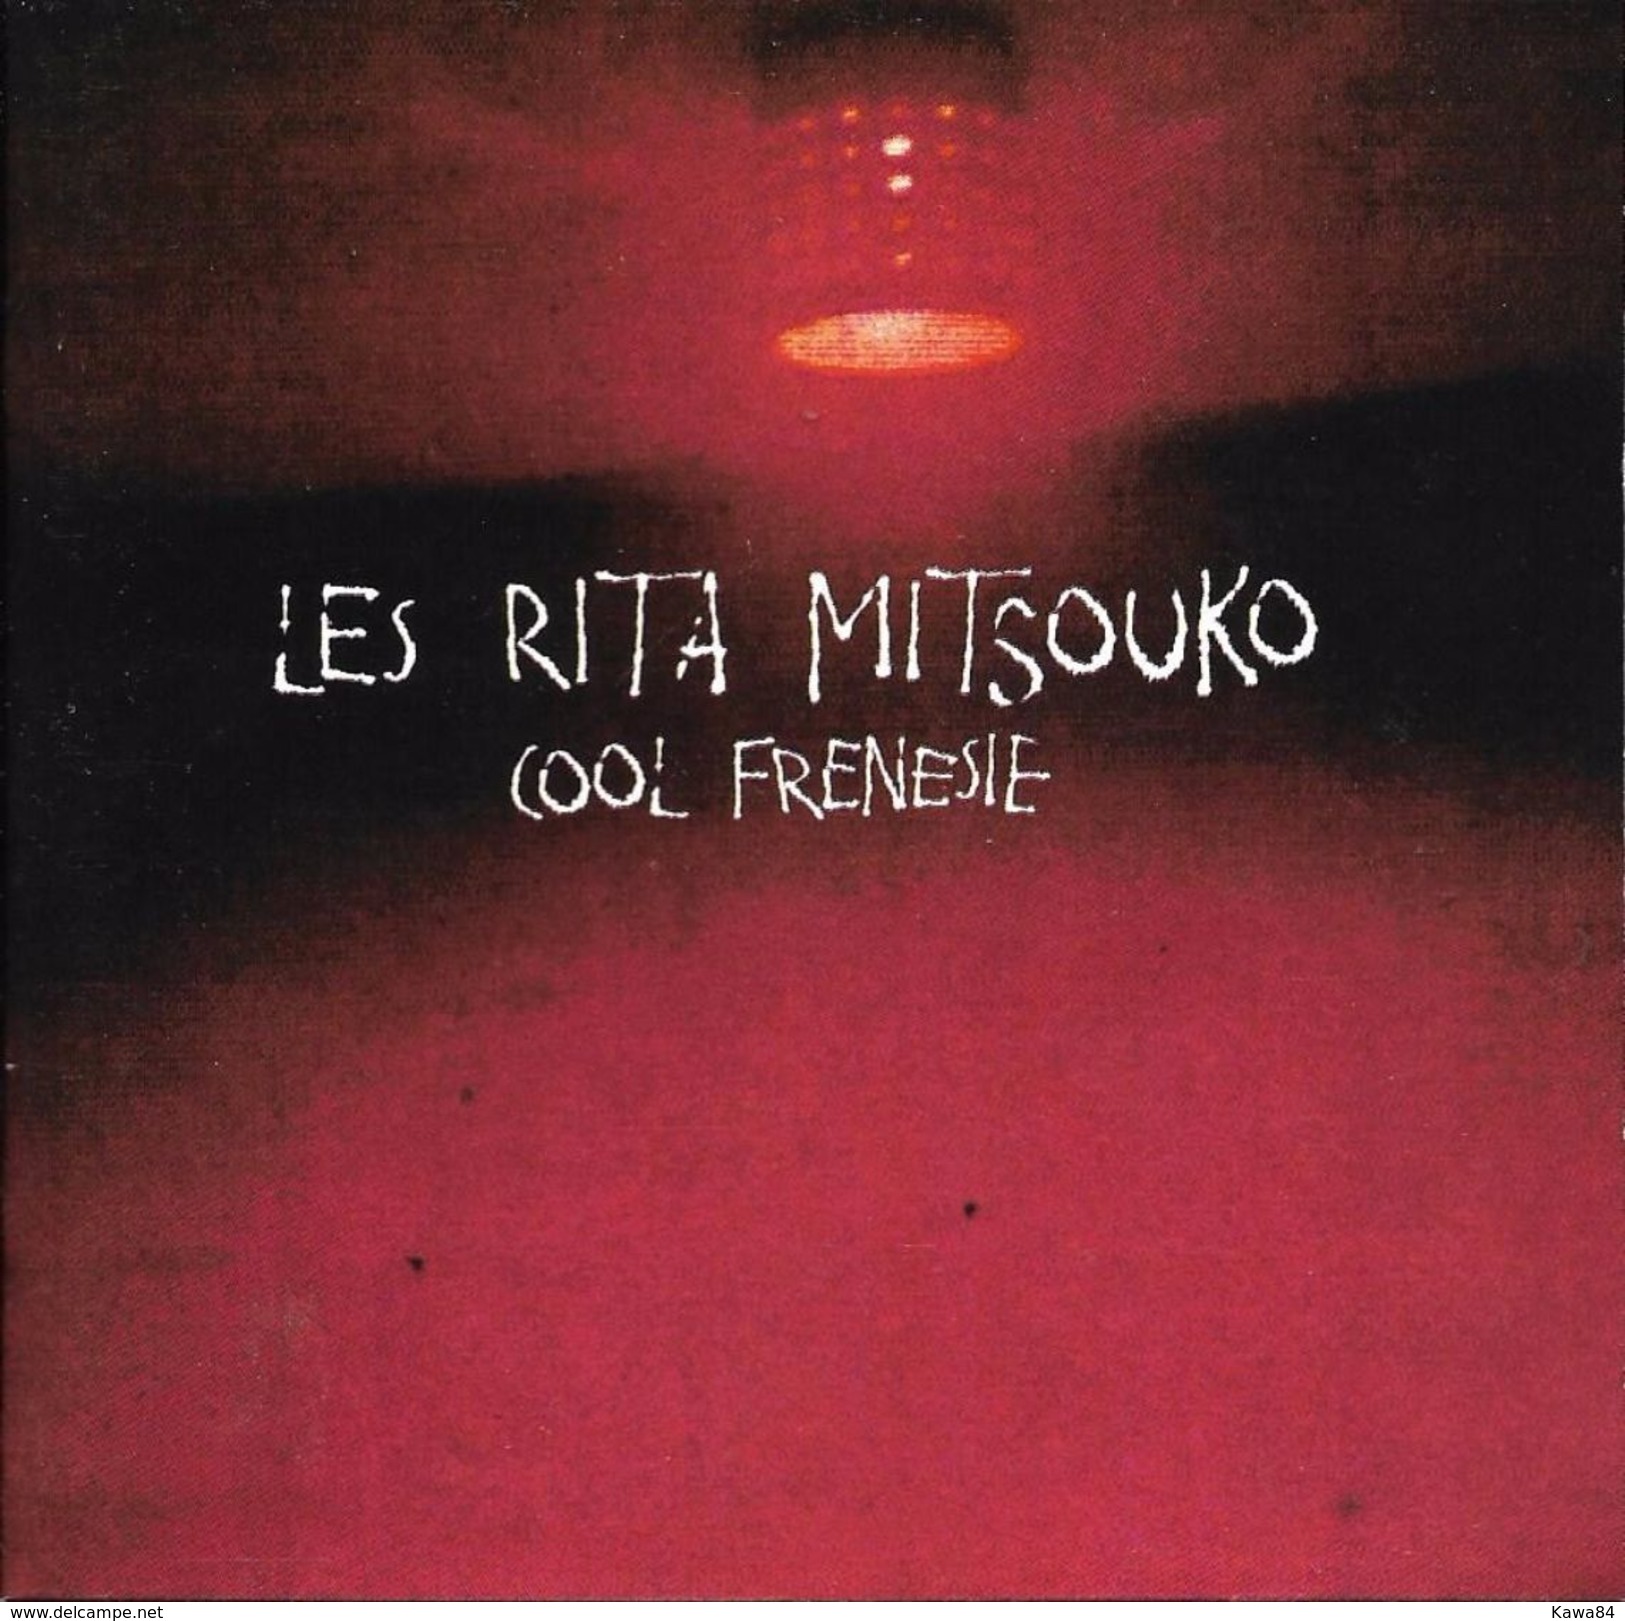 CD  Les Rita Mitsouko  "  Cool Frénésie  "  Europe - Other - French Music